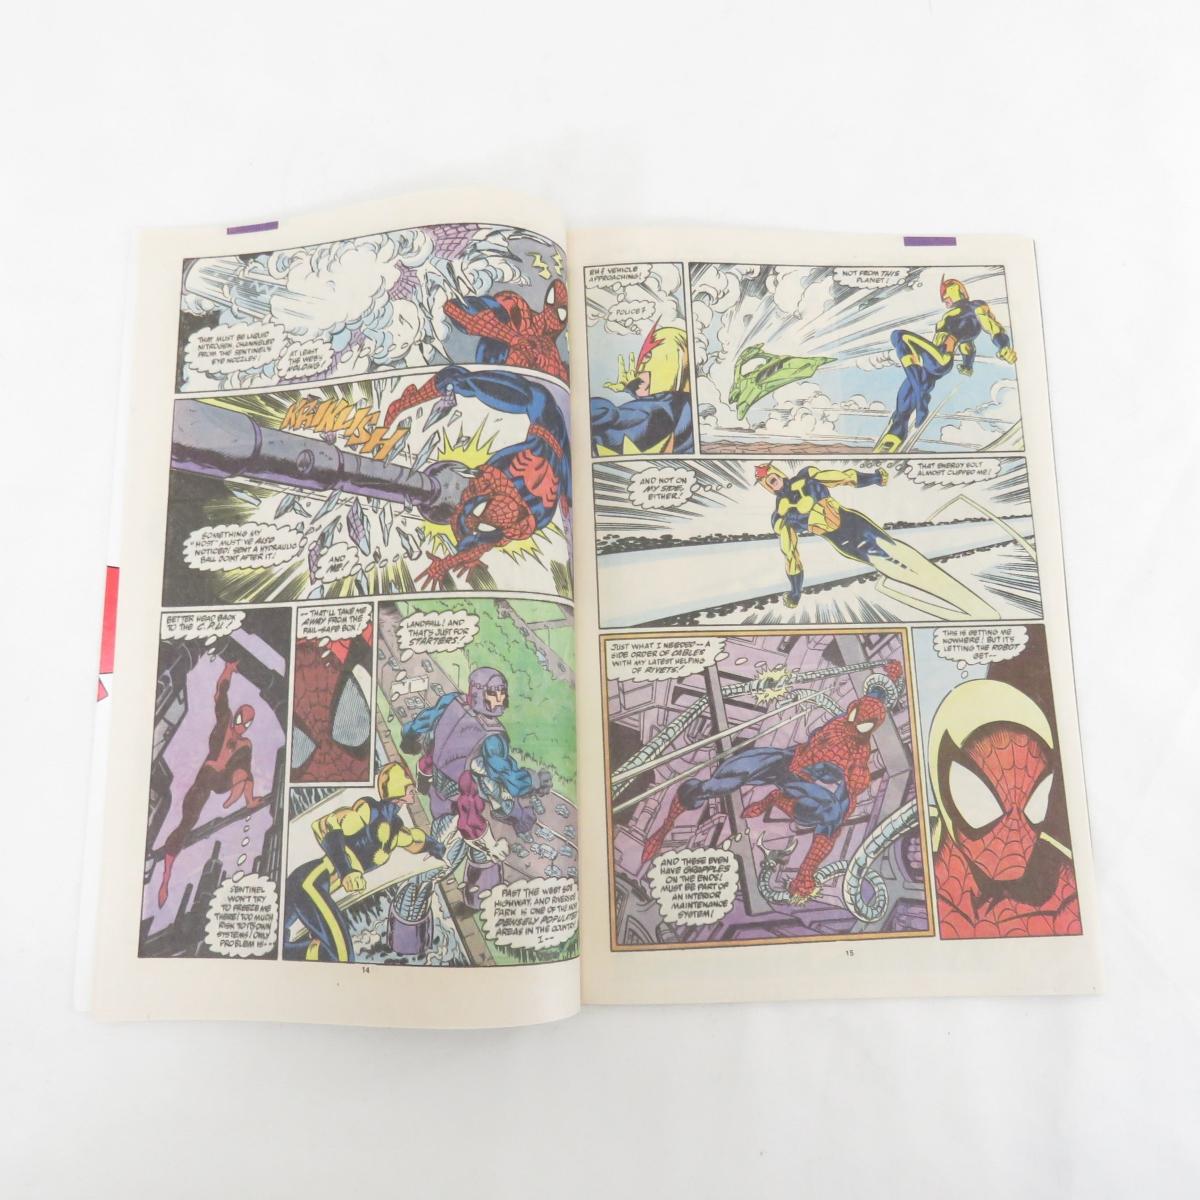 Marvel Comics Amazing Spider-Man & X-Force